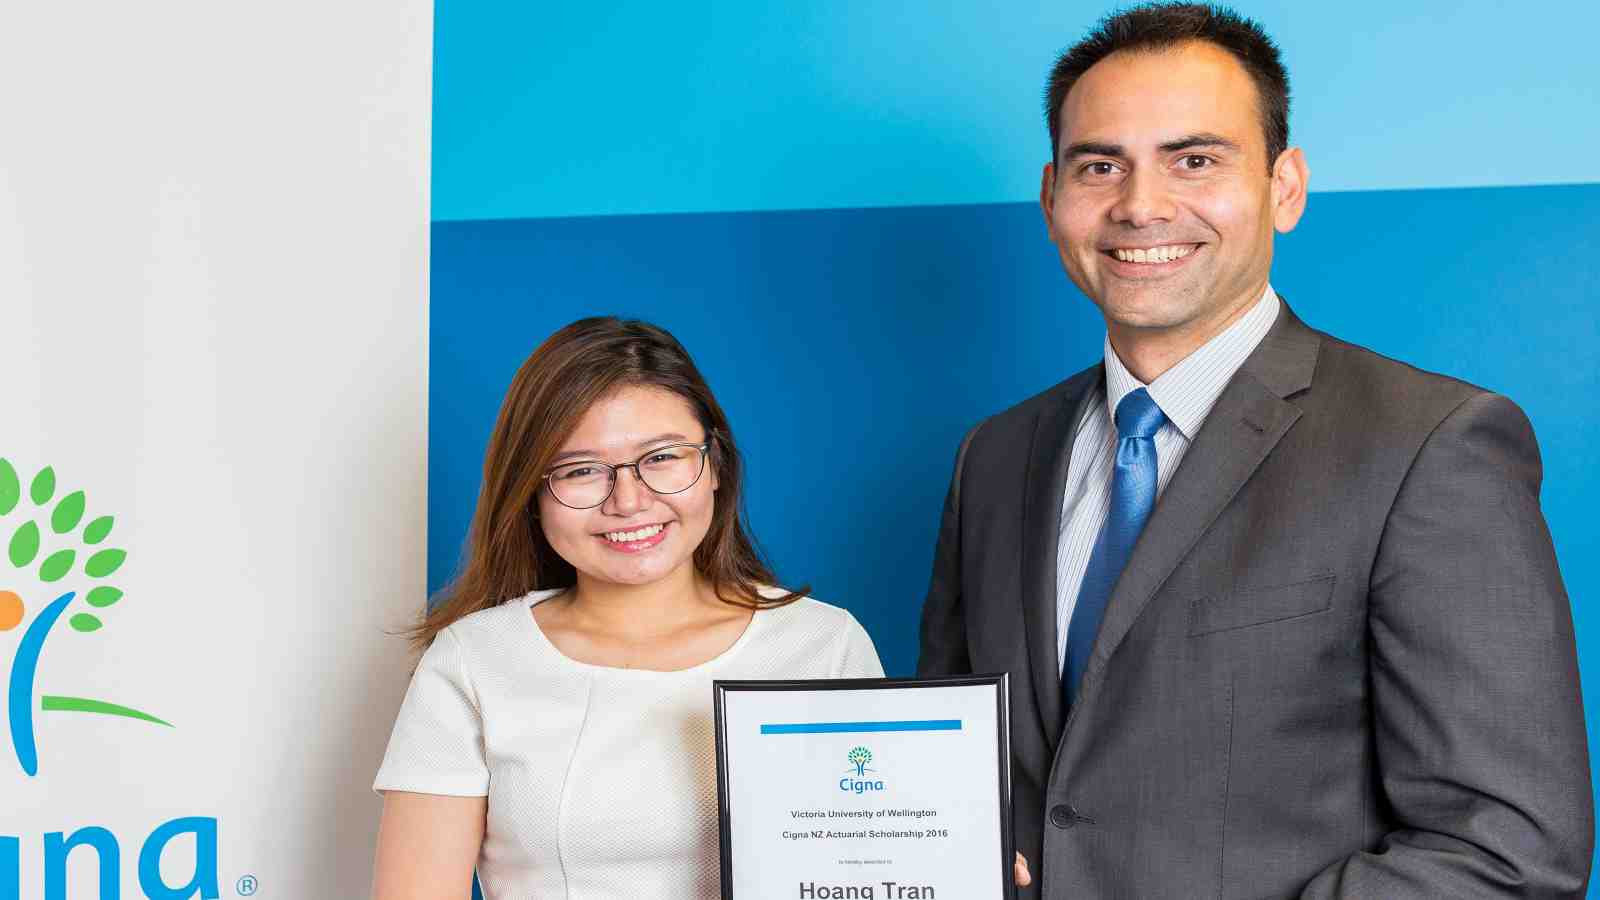 Scholarship winner Hoang Tran receives her award from Cigna New Zealand's Head of Actuarial Nathan Thomas